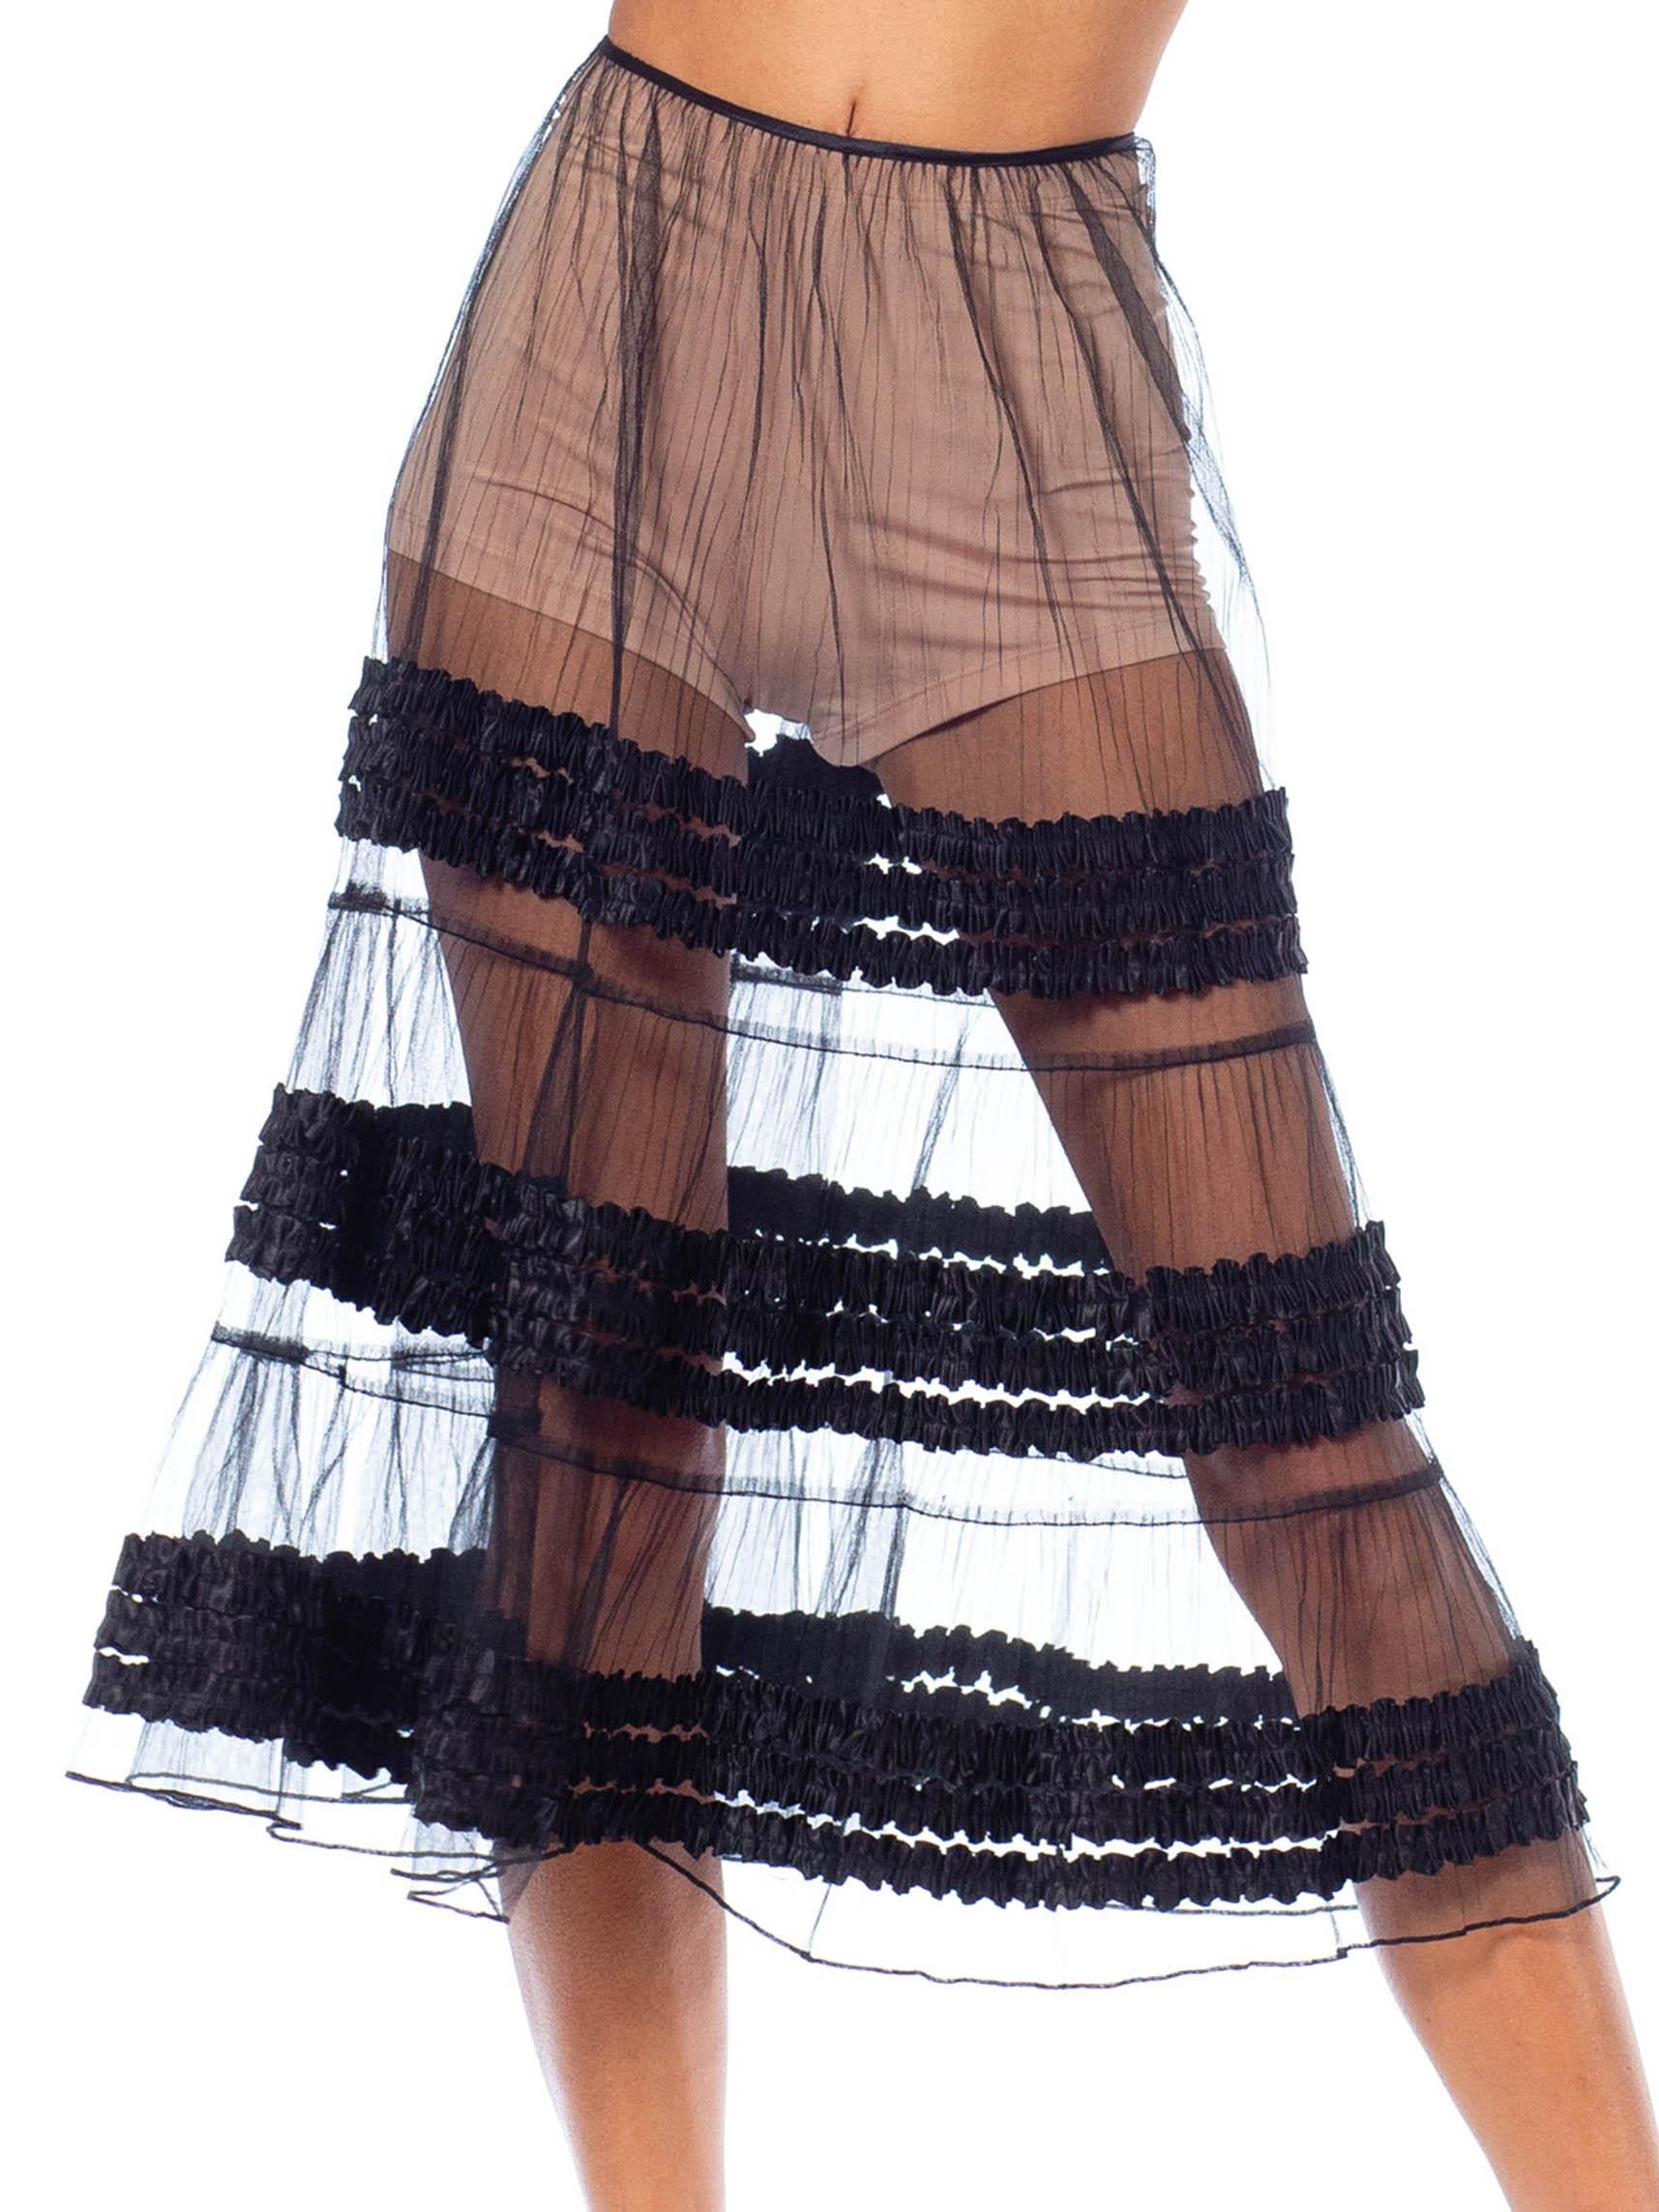 black petticoat skirt